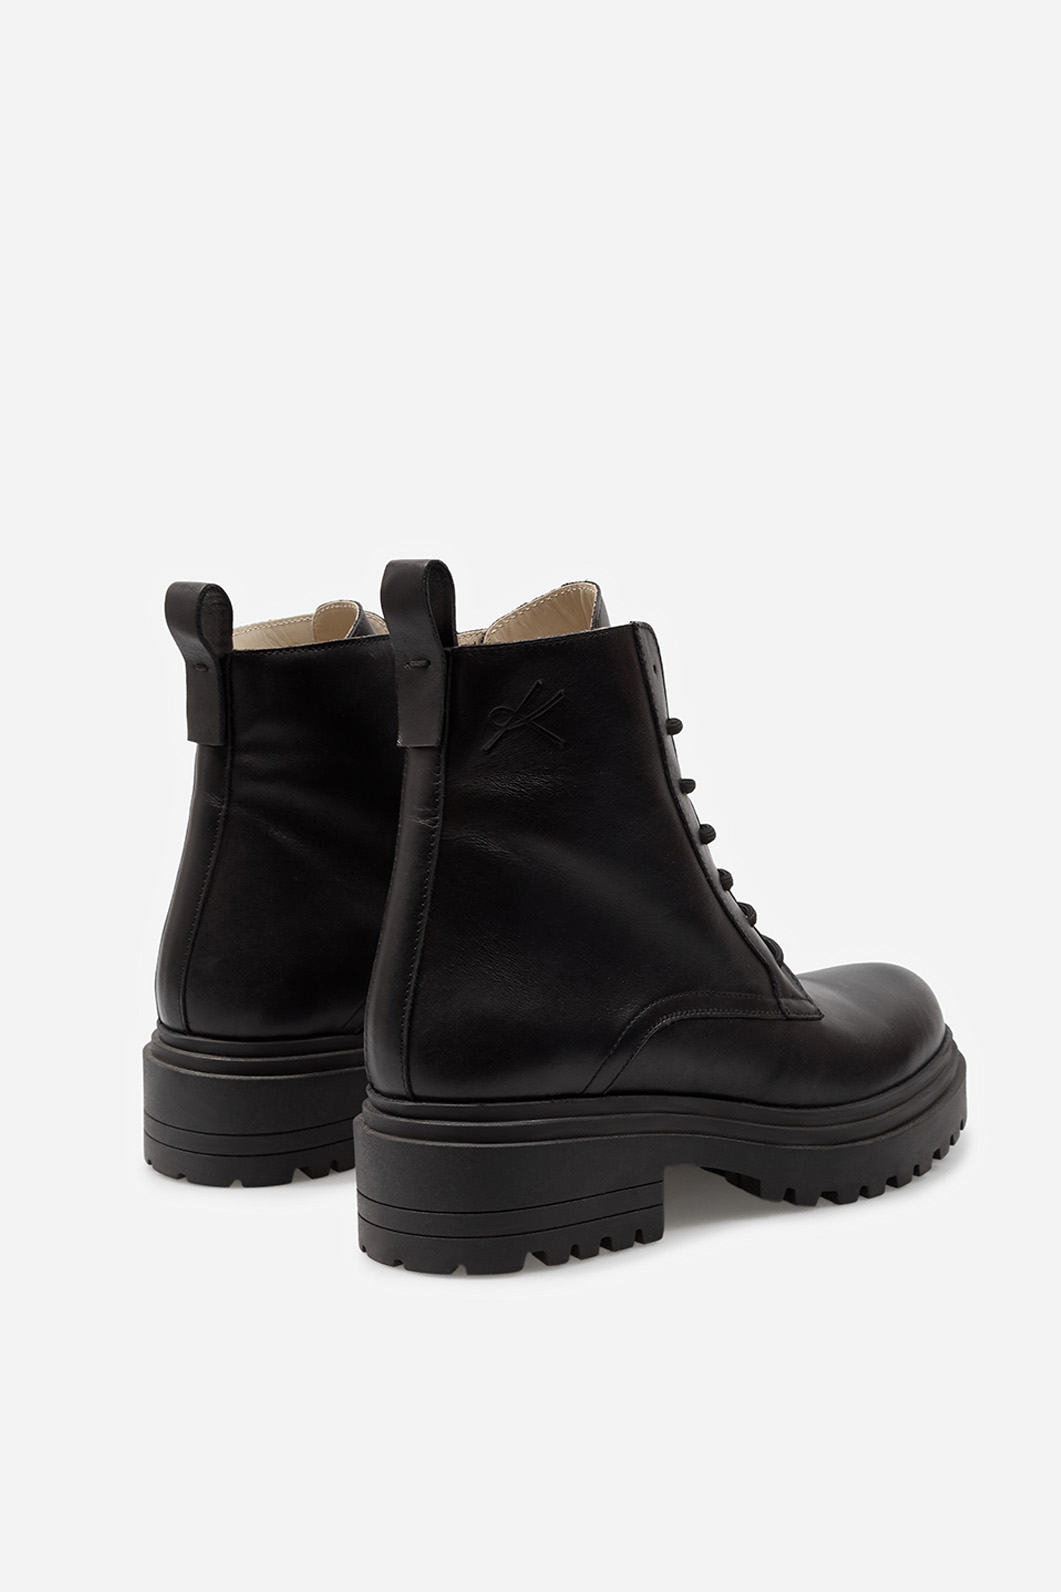 Riri black leather
boots /fur/